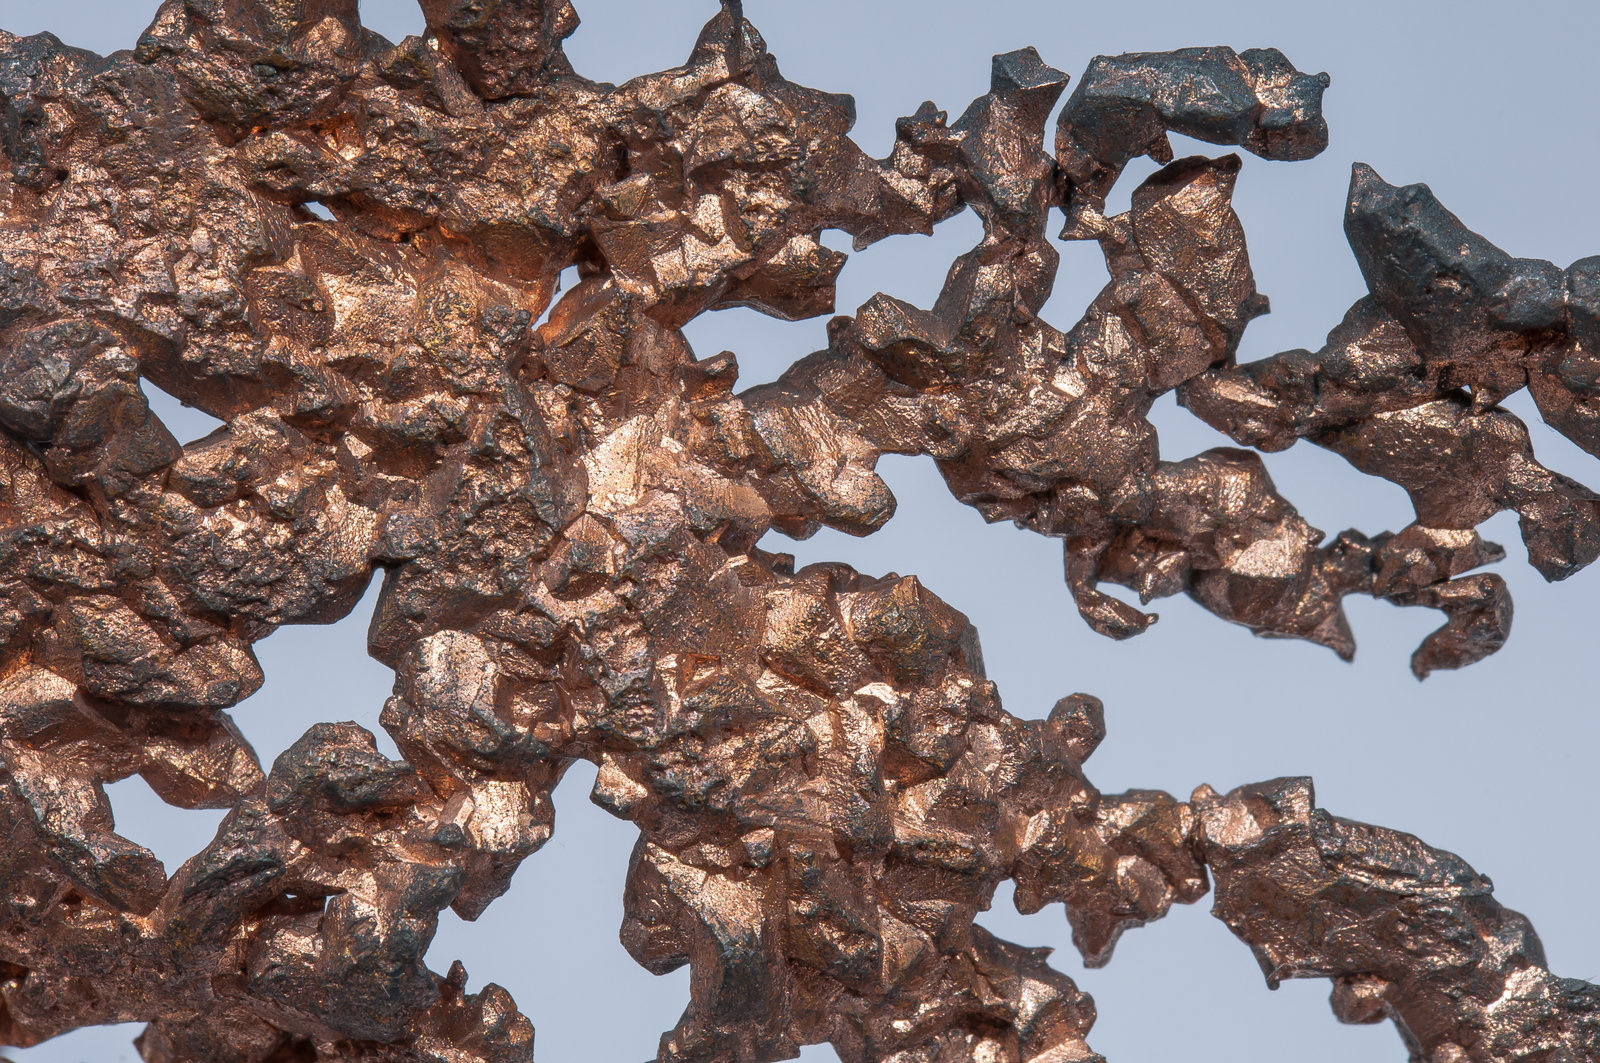 specimens/s_imagesAM5/Copper-NL97AM5d.jpg